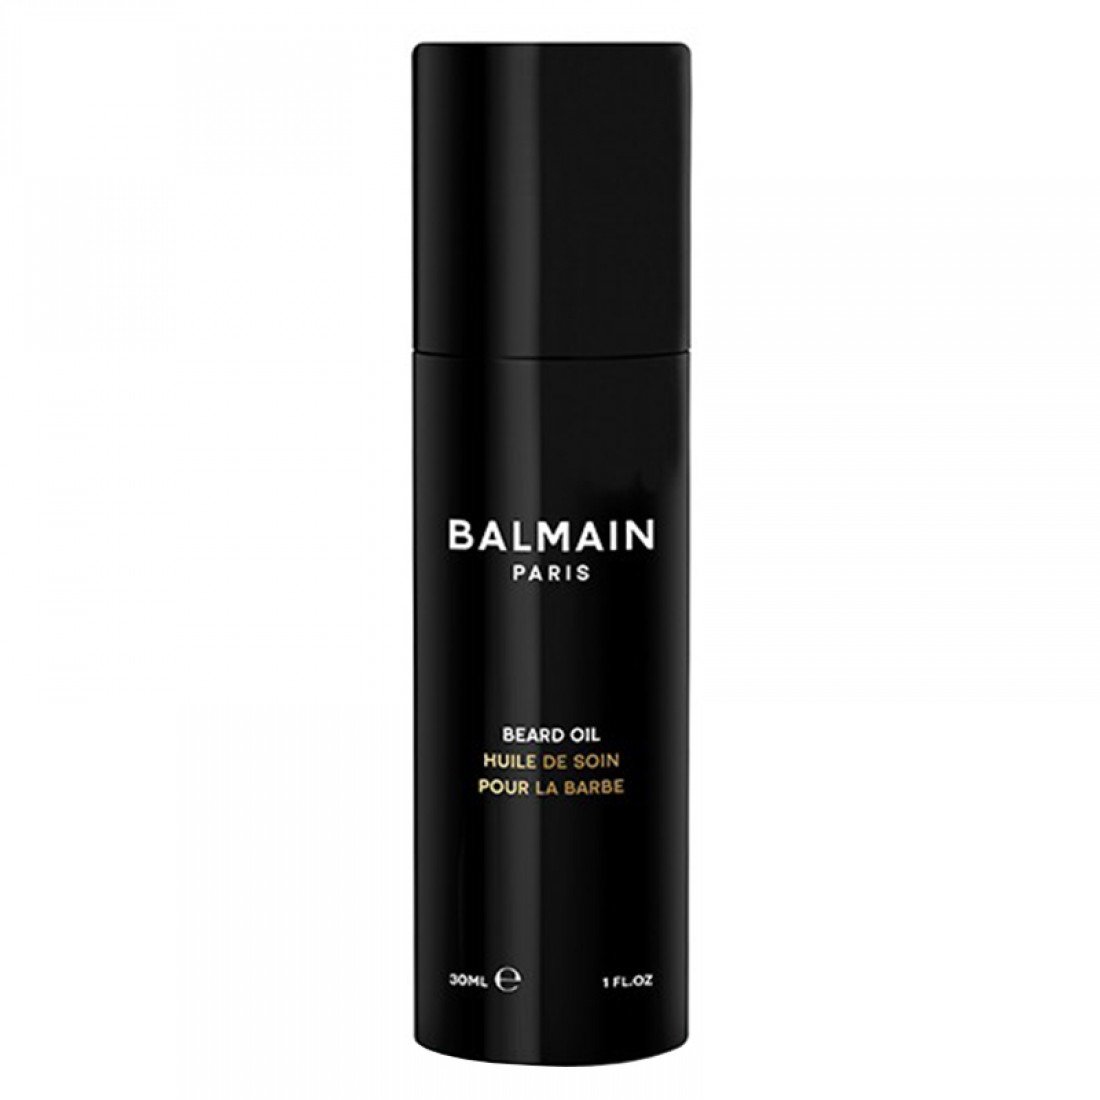 Balmain - Homme Beard Oil 30ml